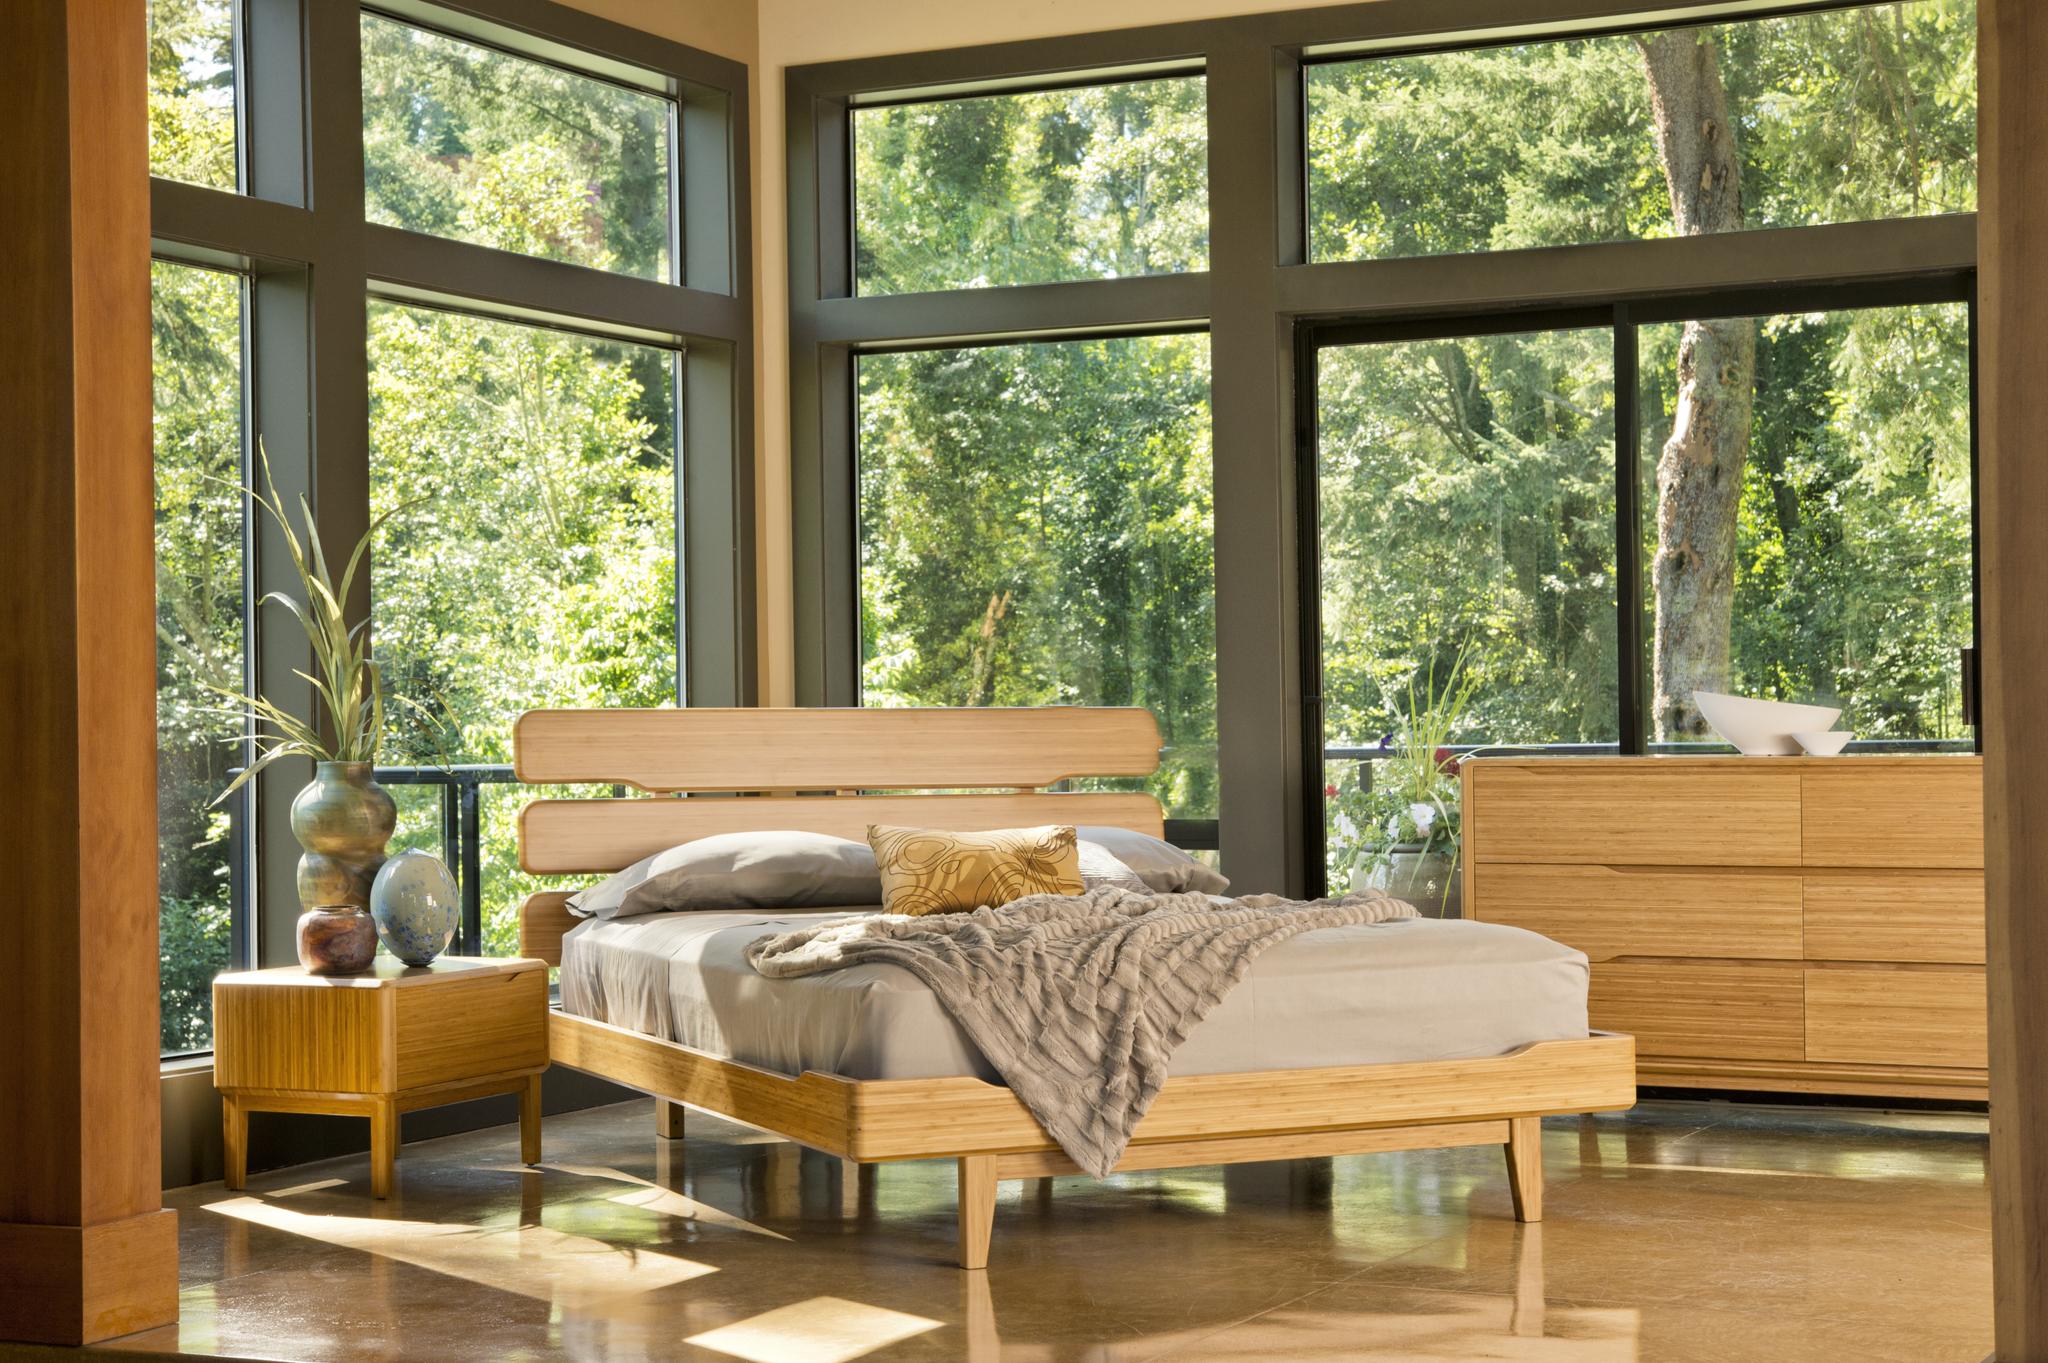 

    
Bamboo Cal King Bedroom Set 3Pcs Caramelized Modern Currant by Greenington
